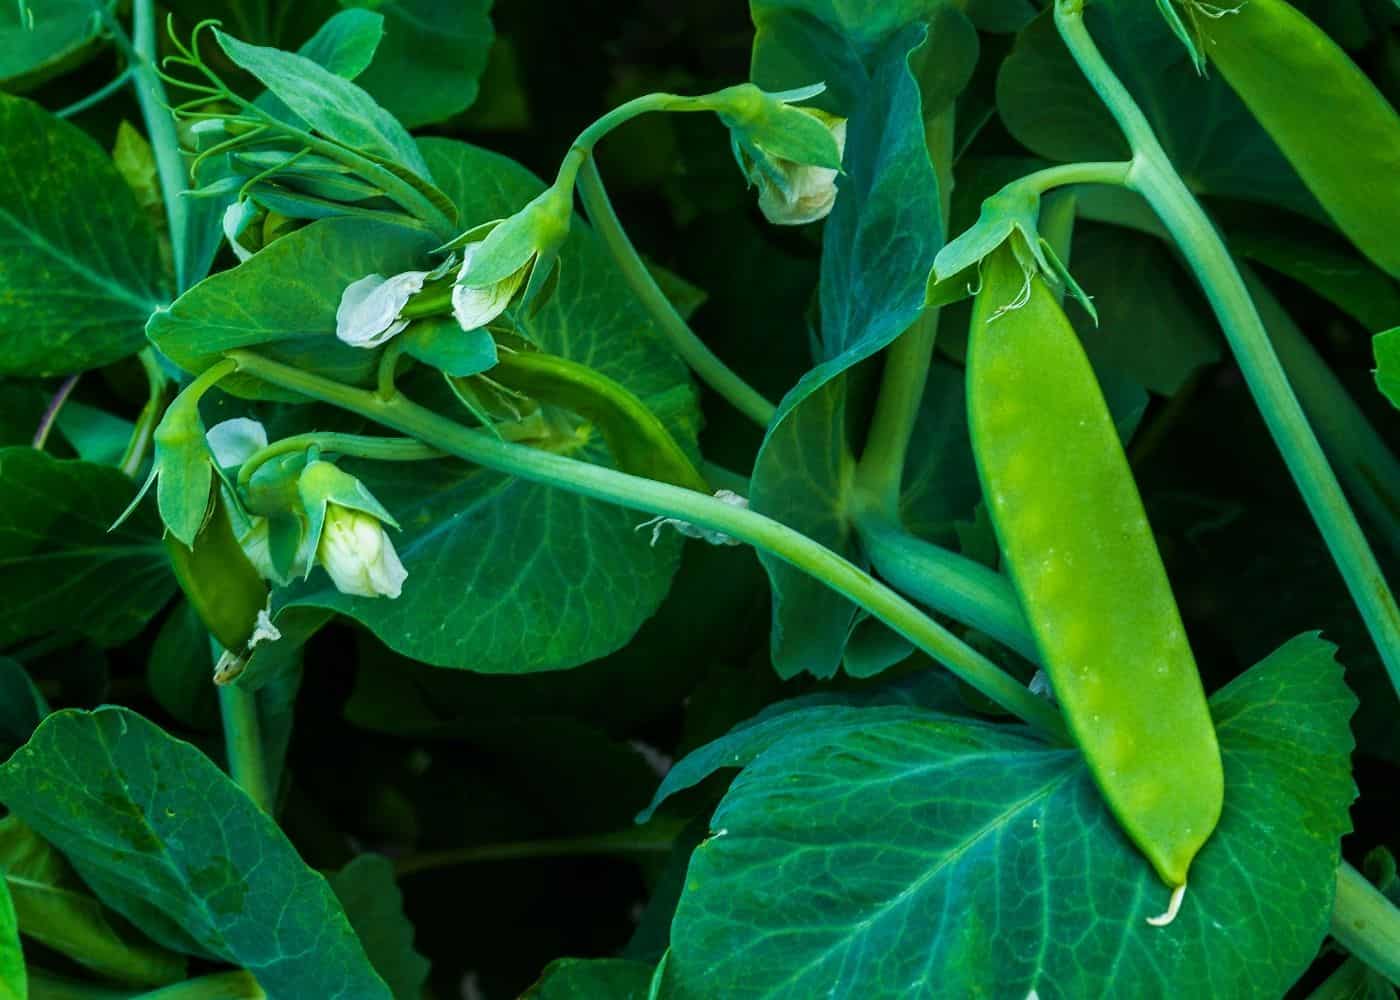 Peas - companion plants for potatoes